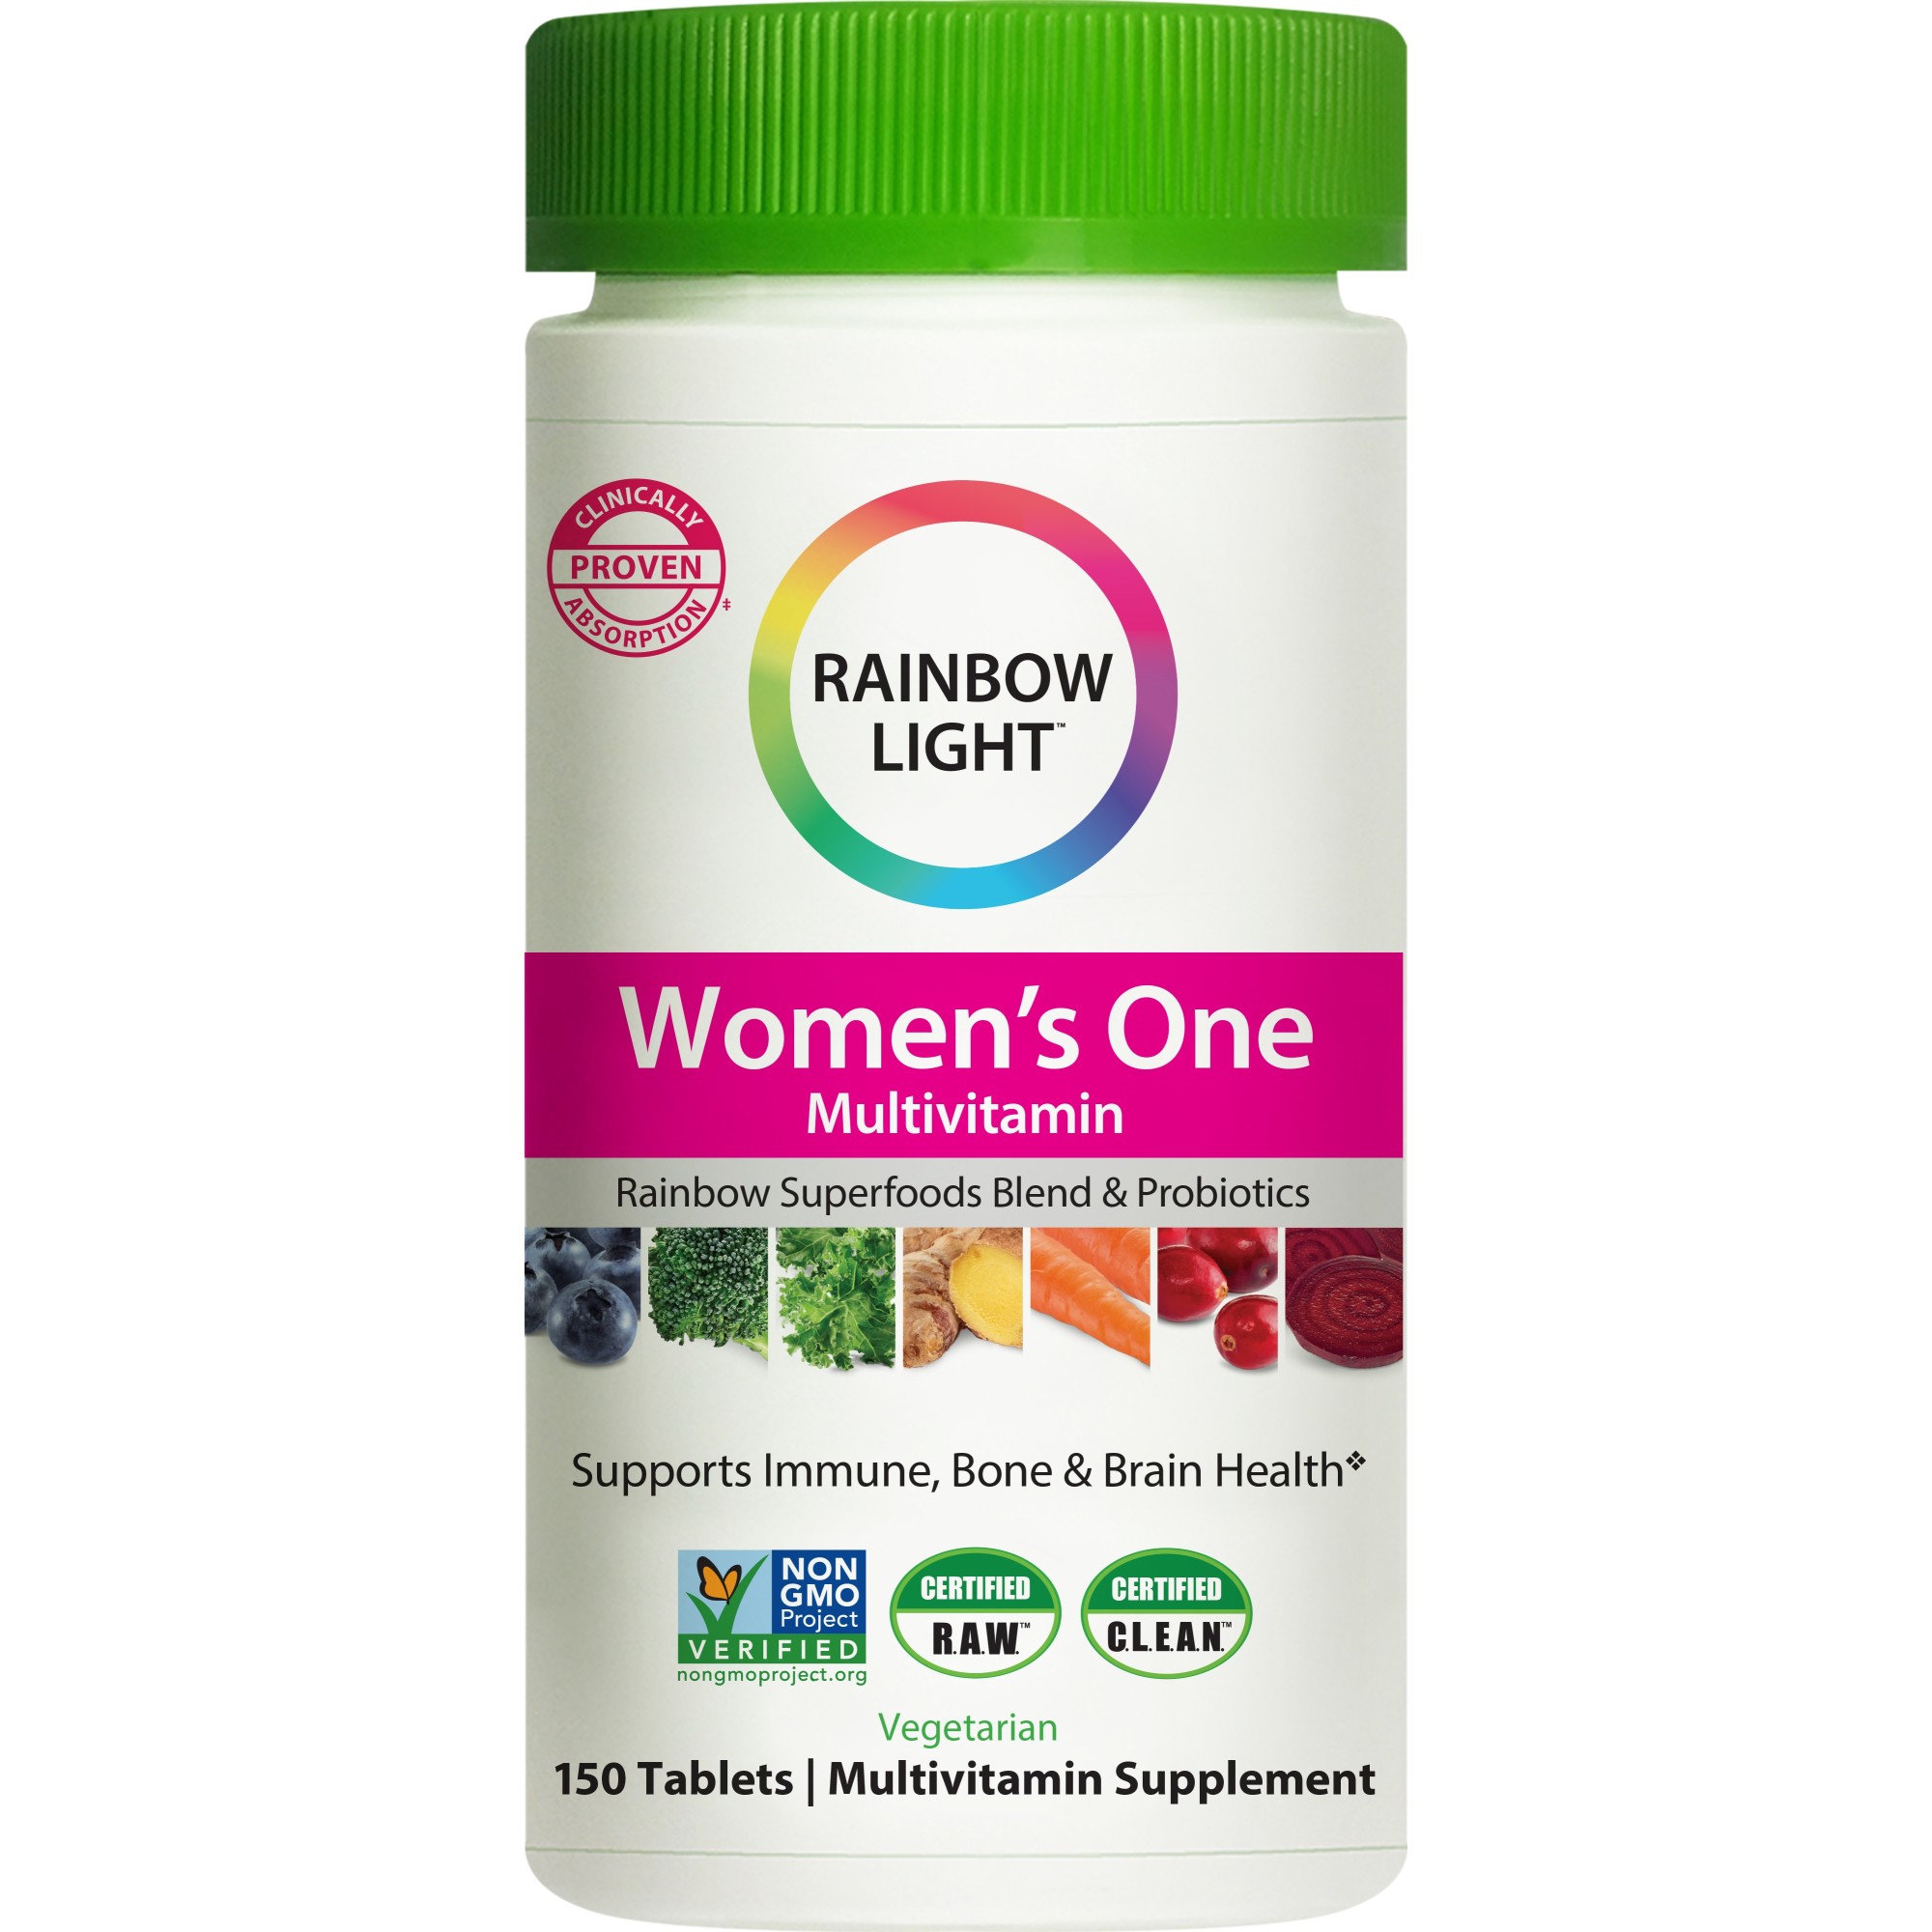 Rainbow Light Women's One Multivitamin, Providing Immune Support for Women's Health - 150 Tablets - image 2 of 19